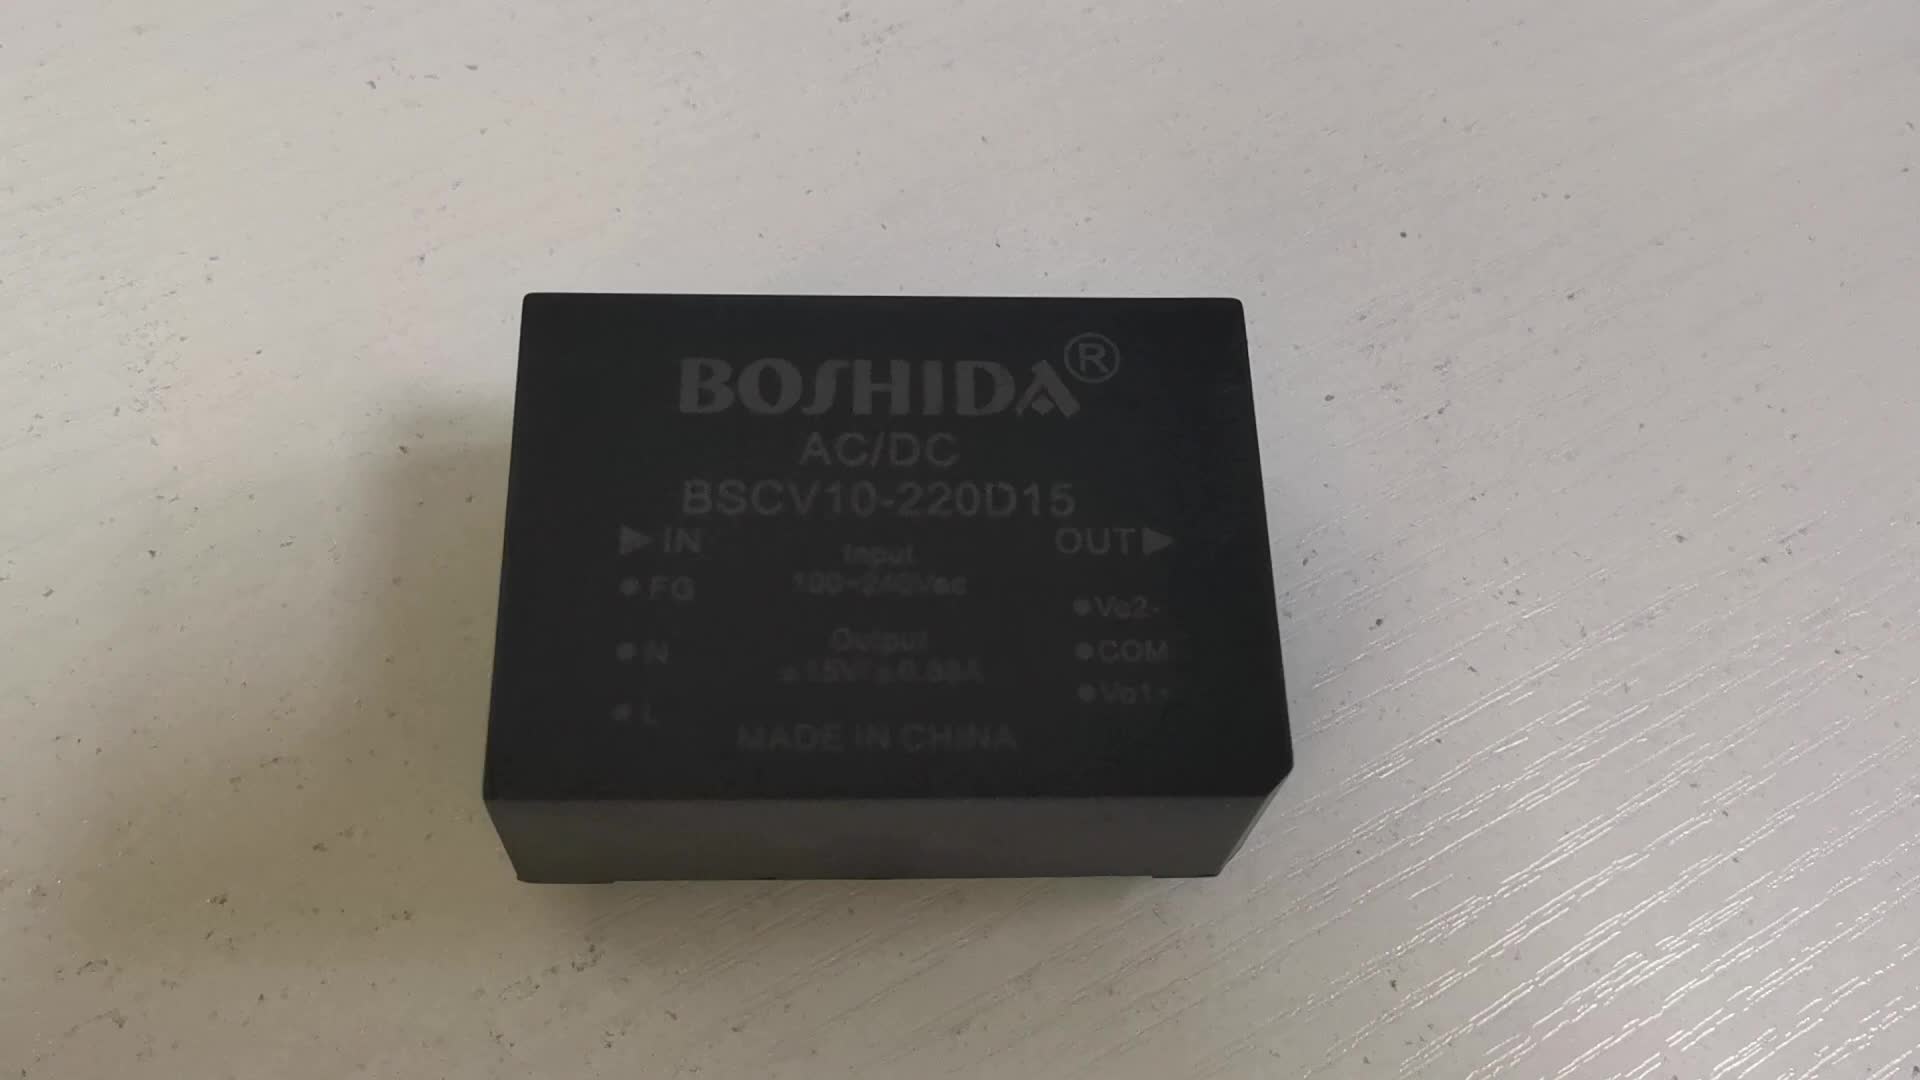  BOSHIDA 电源模块的常见主要特性